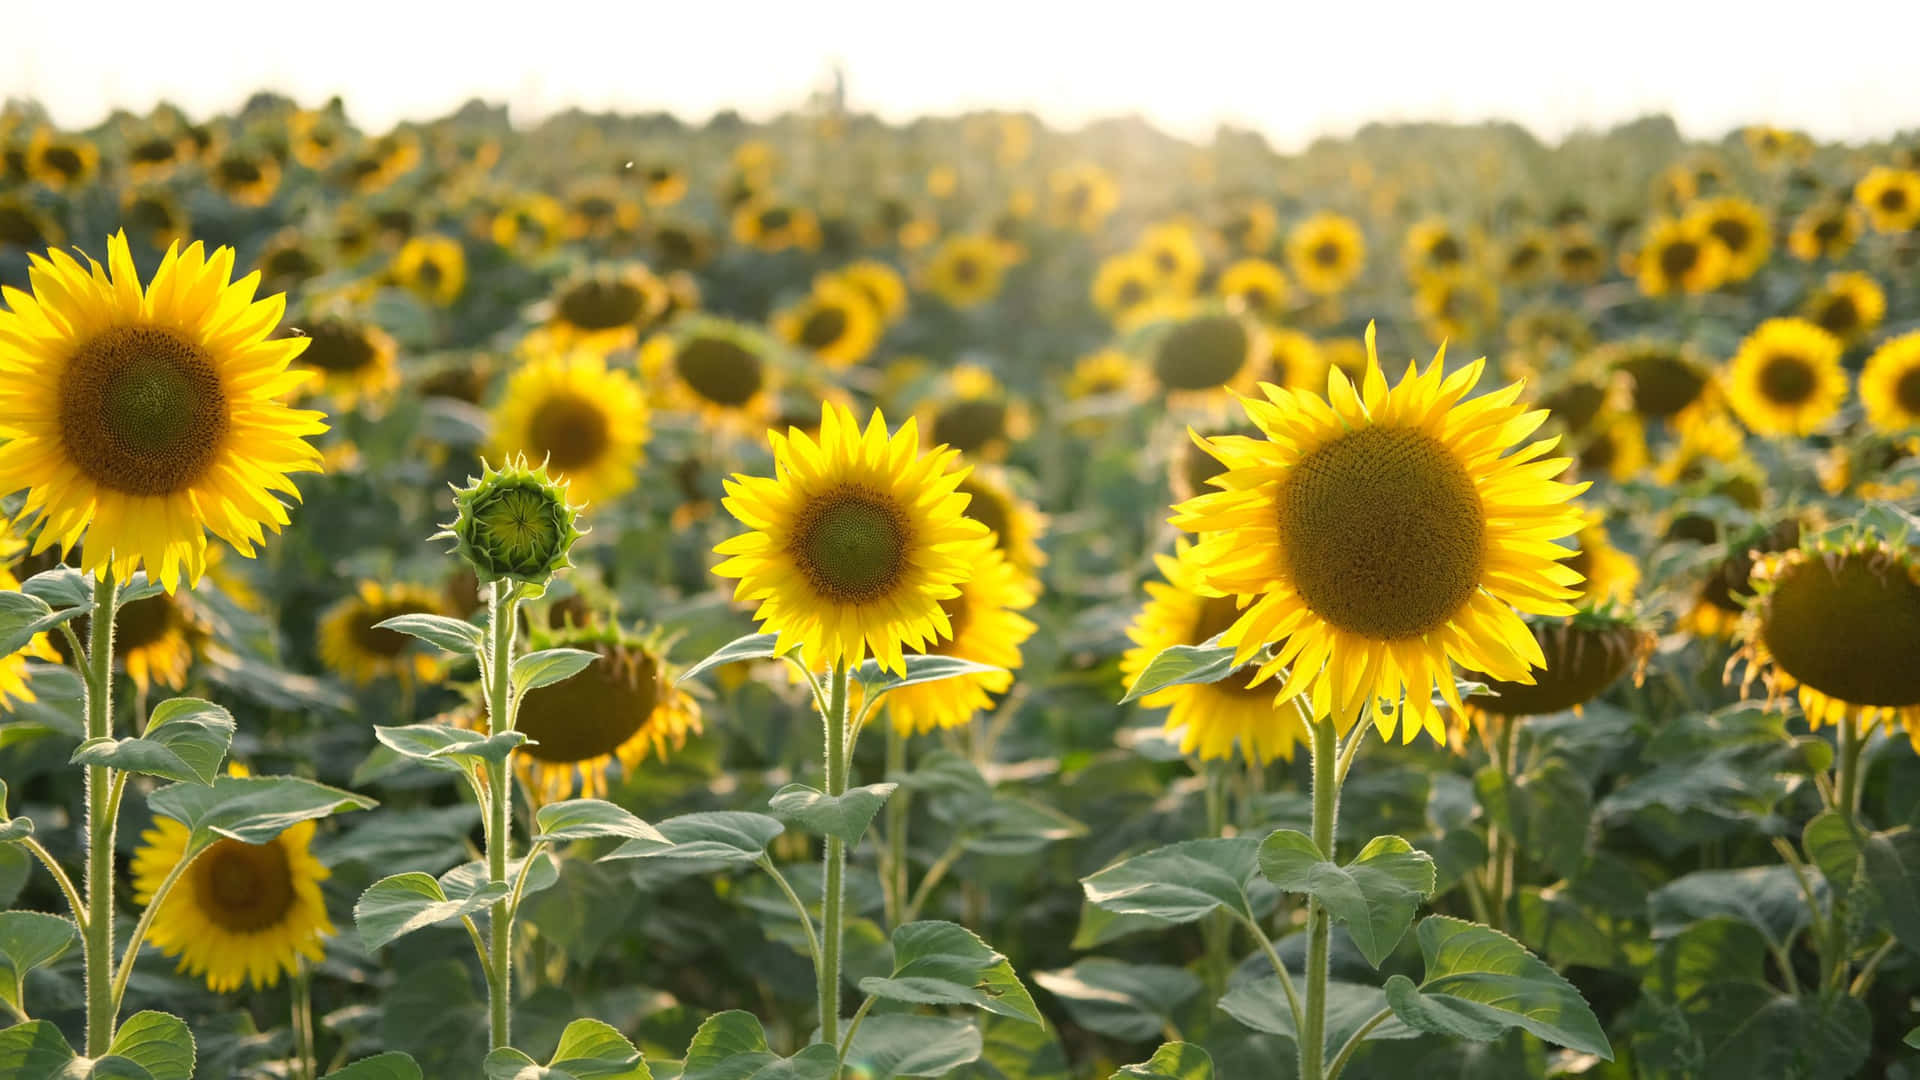 Garden Of Sunflowers In Yellow Aesthetic Flower Desktop Wallpaper